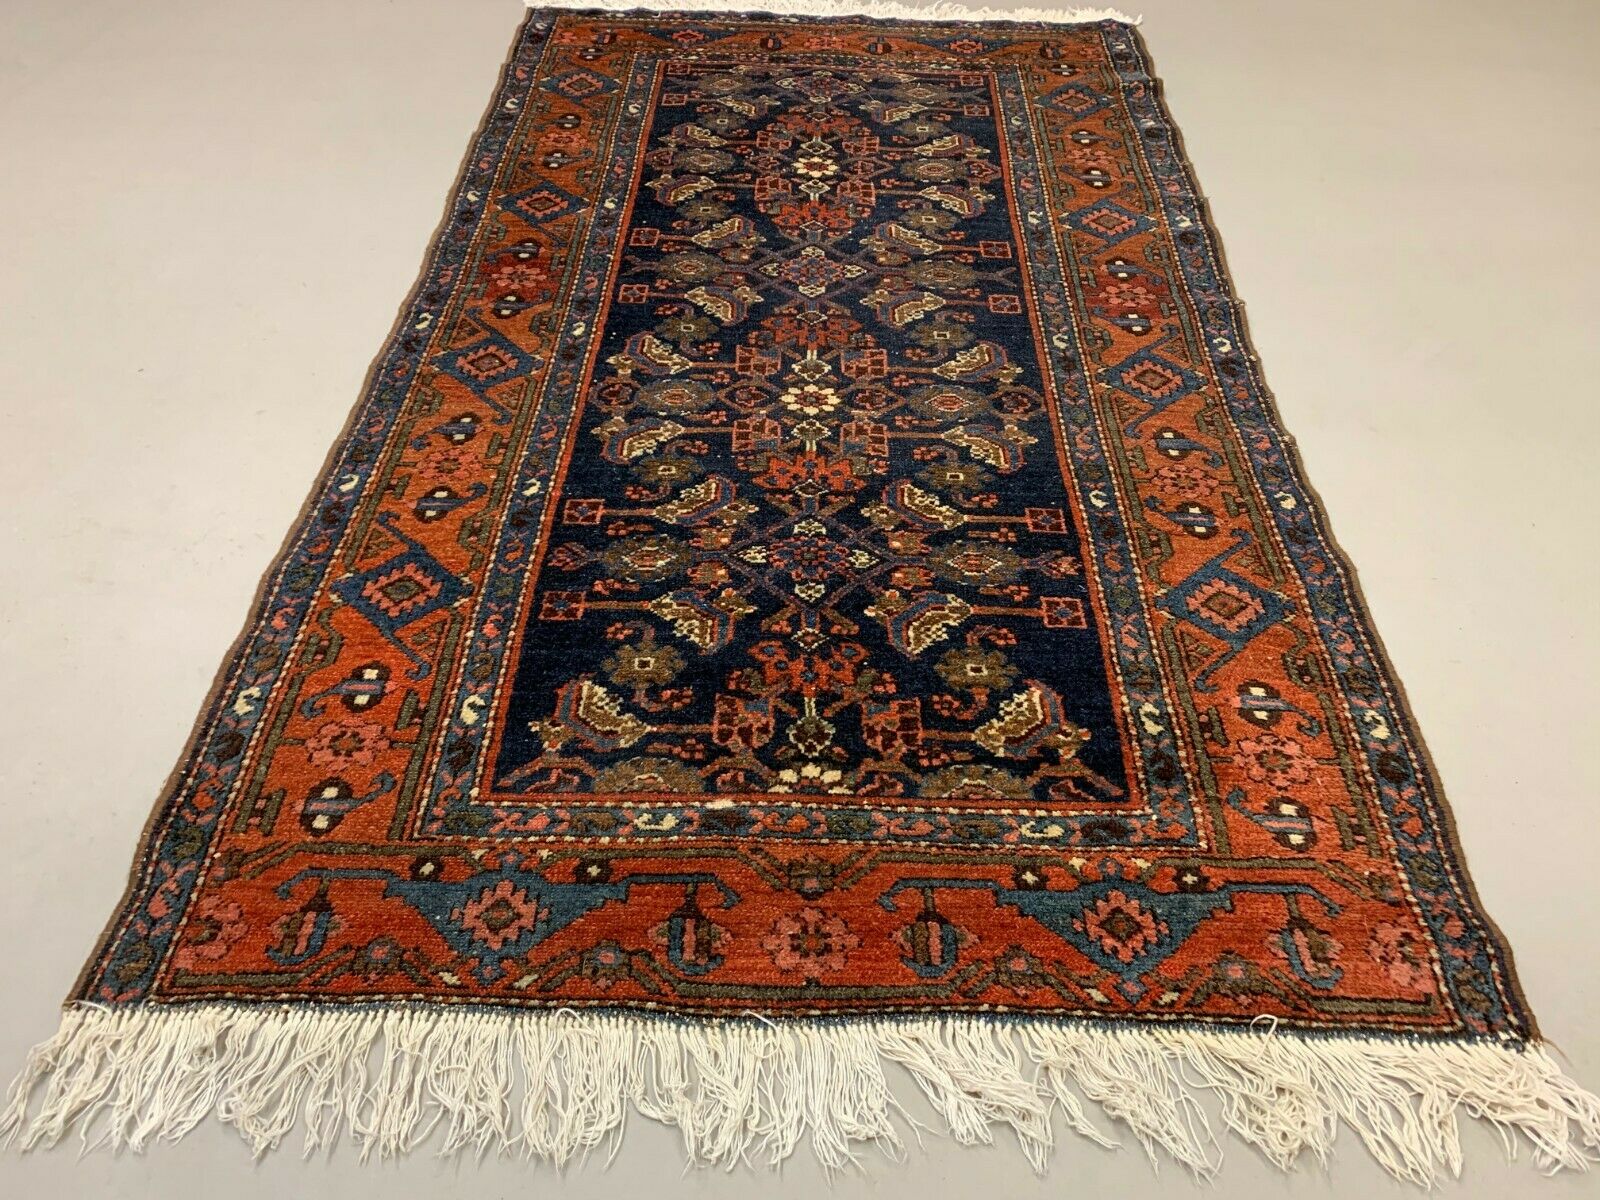 Vintage Malayer Rug 185x105 cm, medium, Tribal oriental Carpet Navy Blue, Red